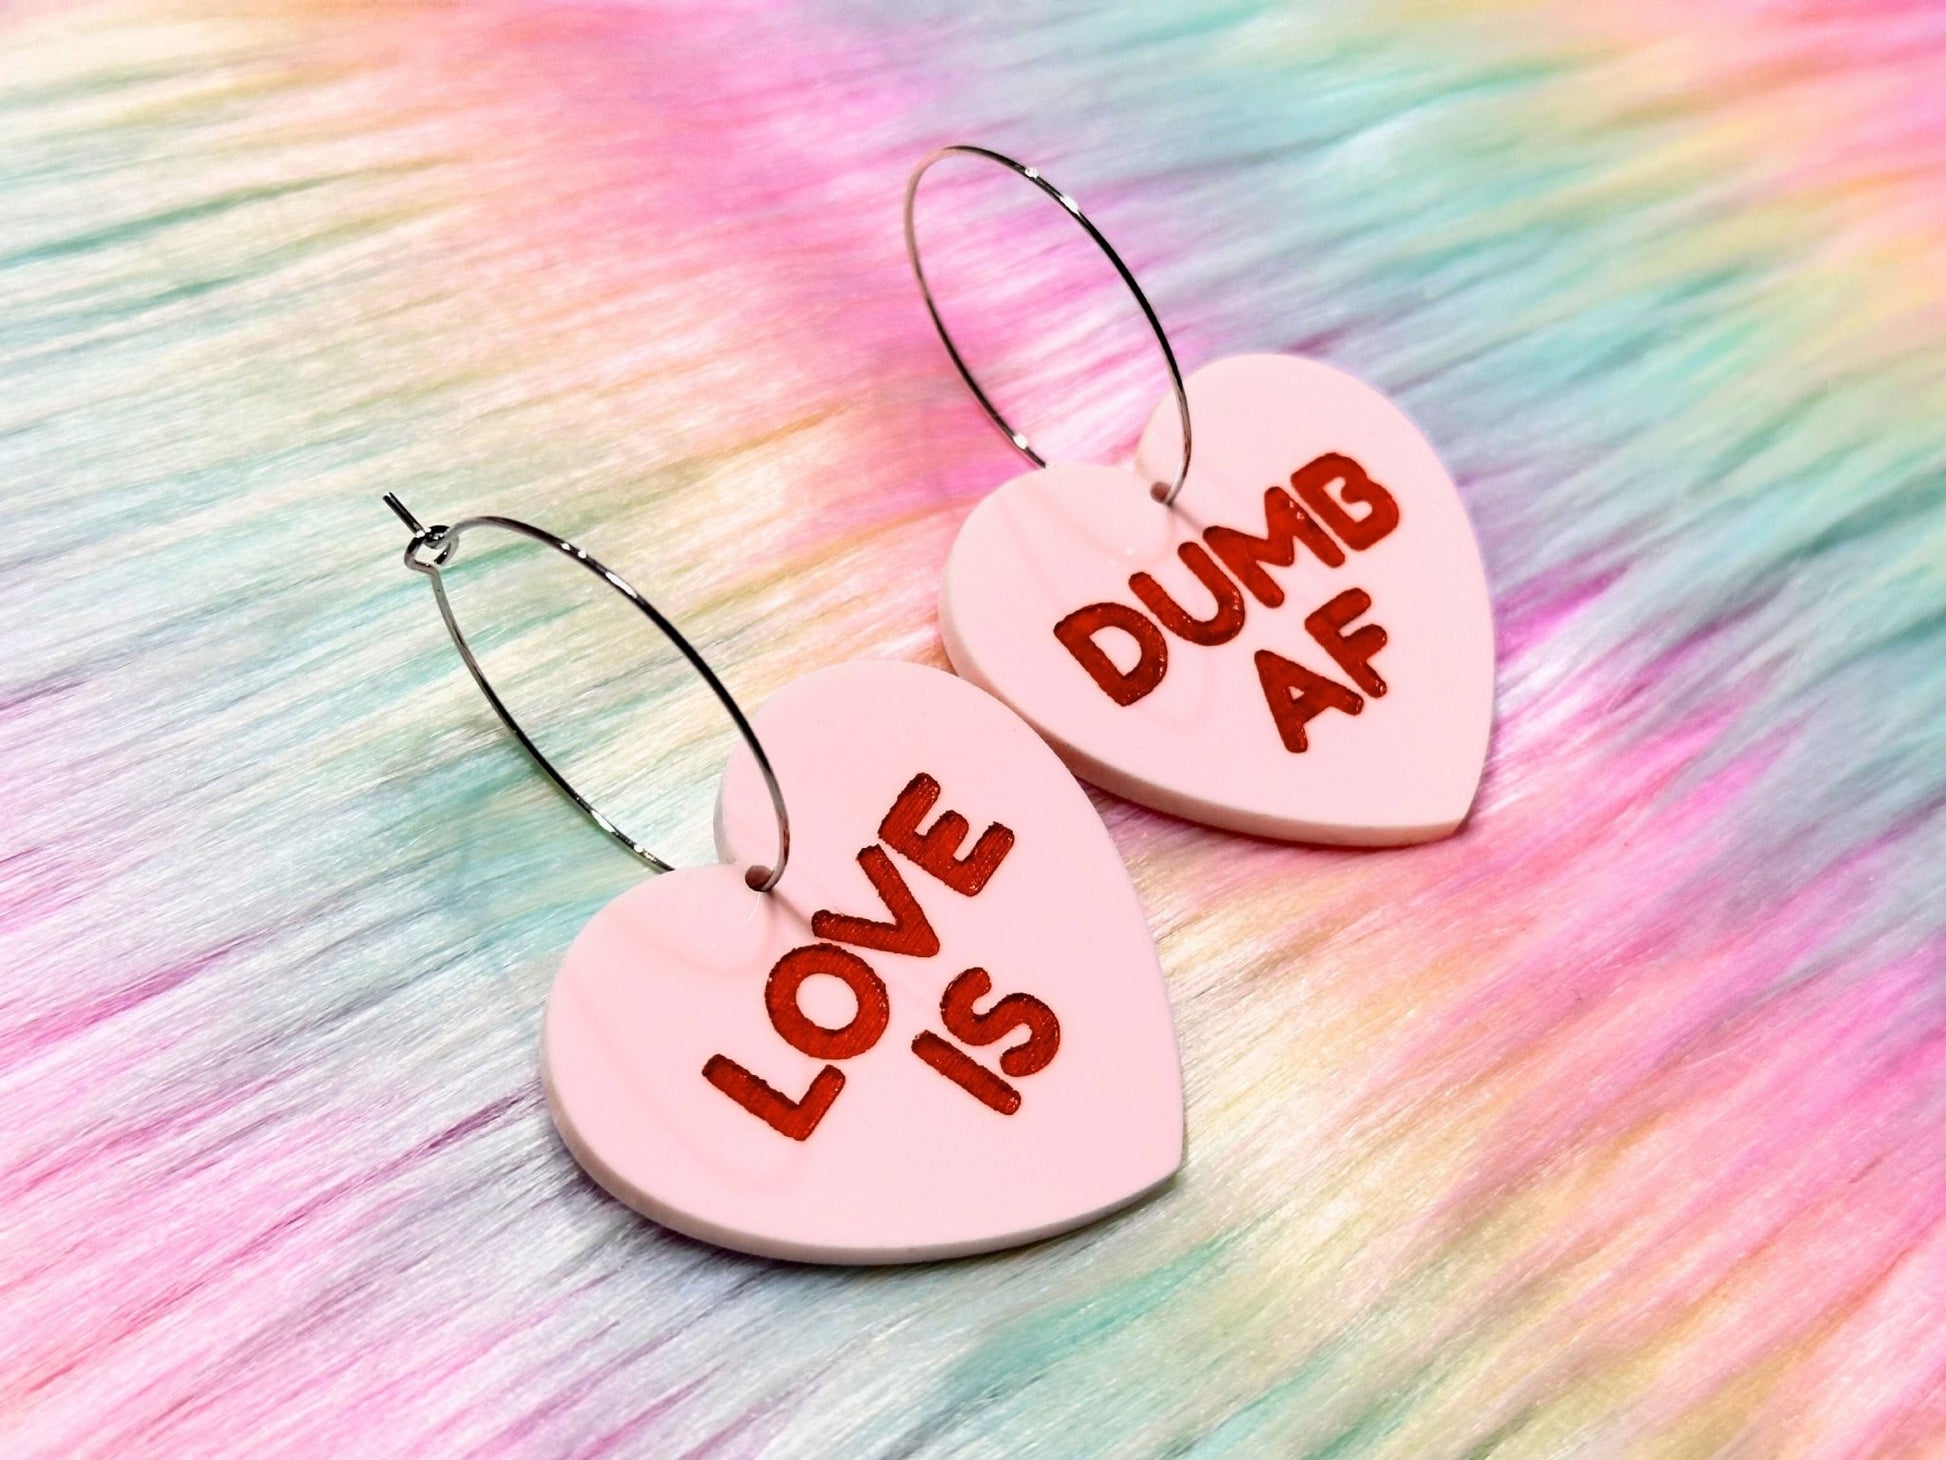 Naughty Heart Earrings - "Love is Dumb AF" - Painted Raina